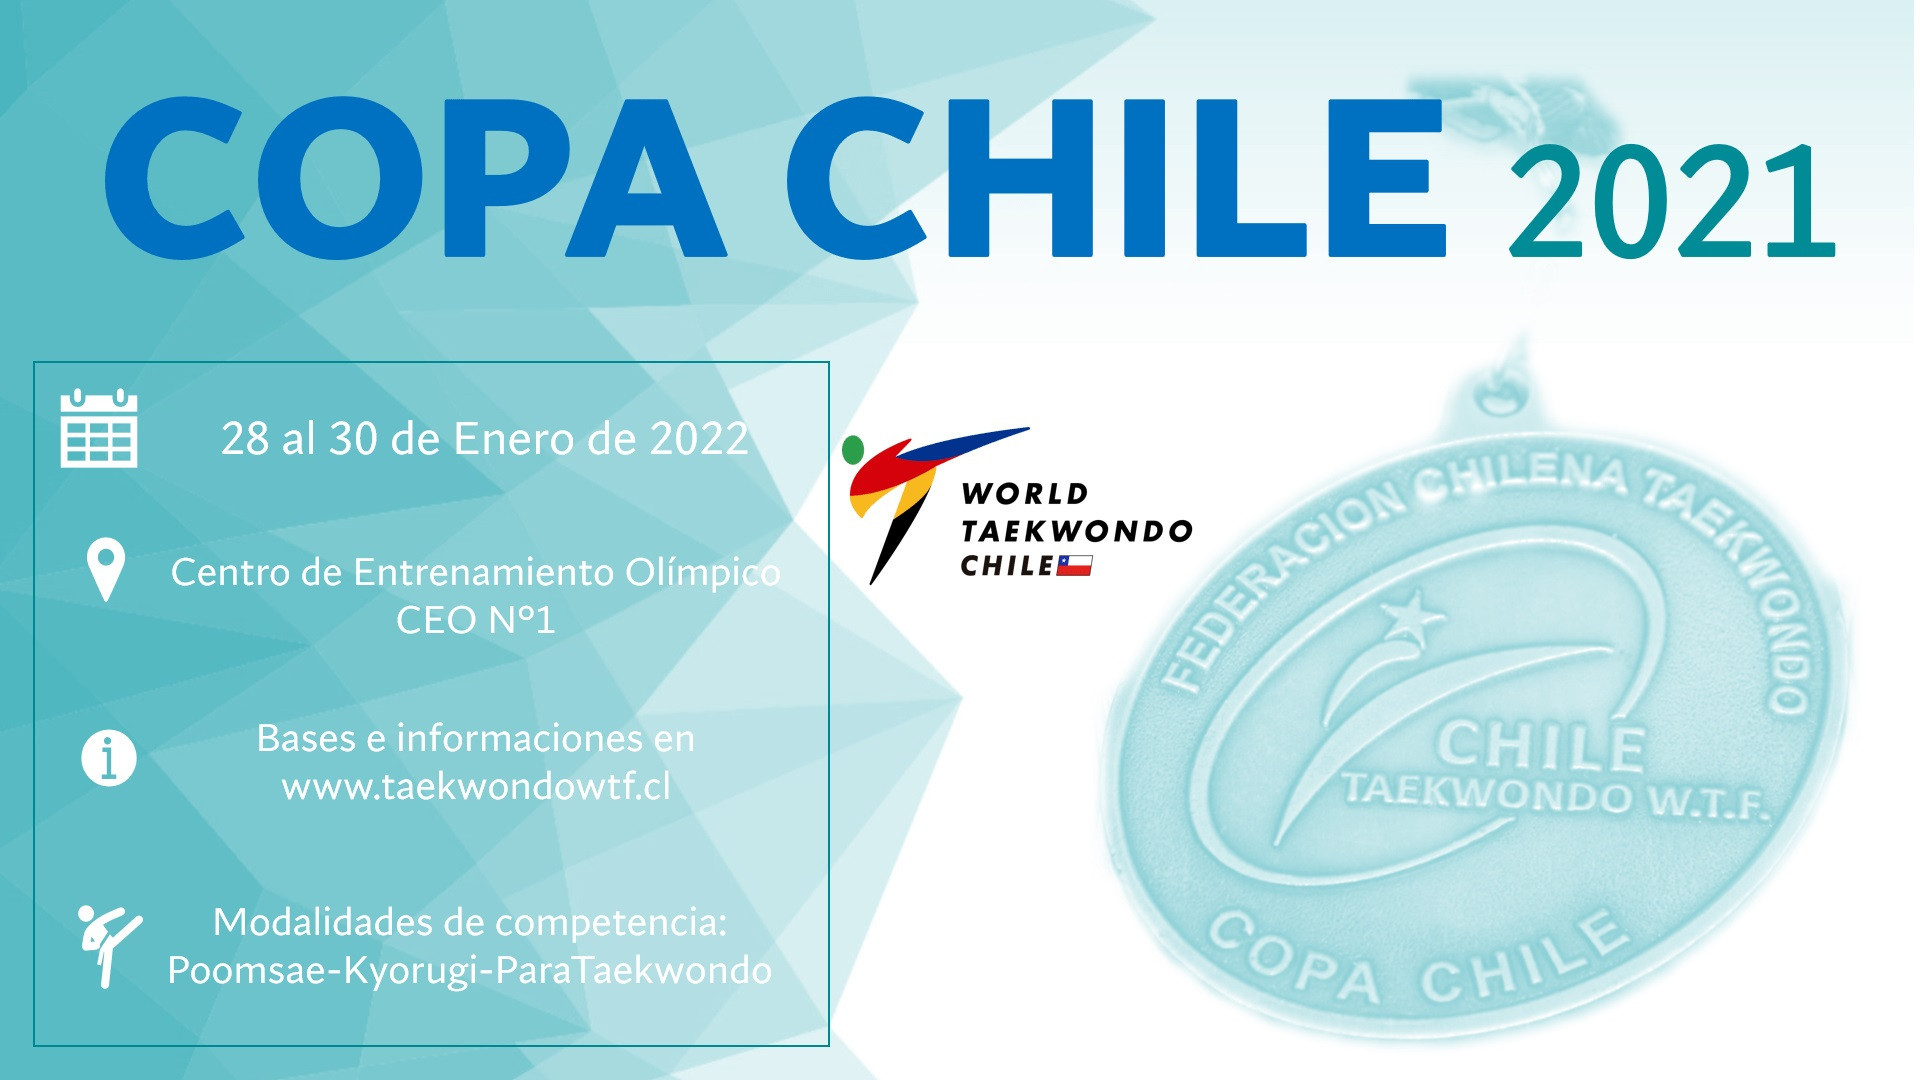 The Copa Chile event will take place in Santiago ©WTC